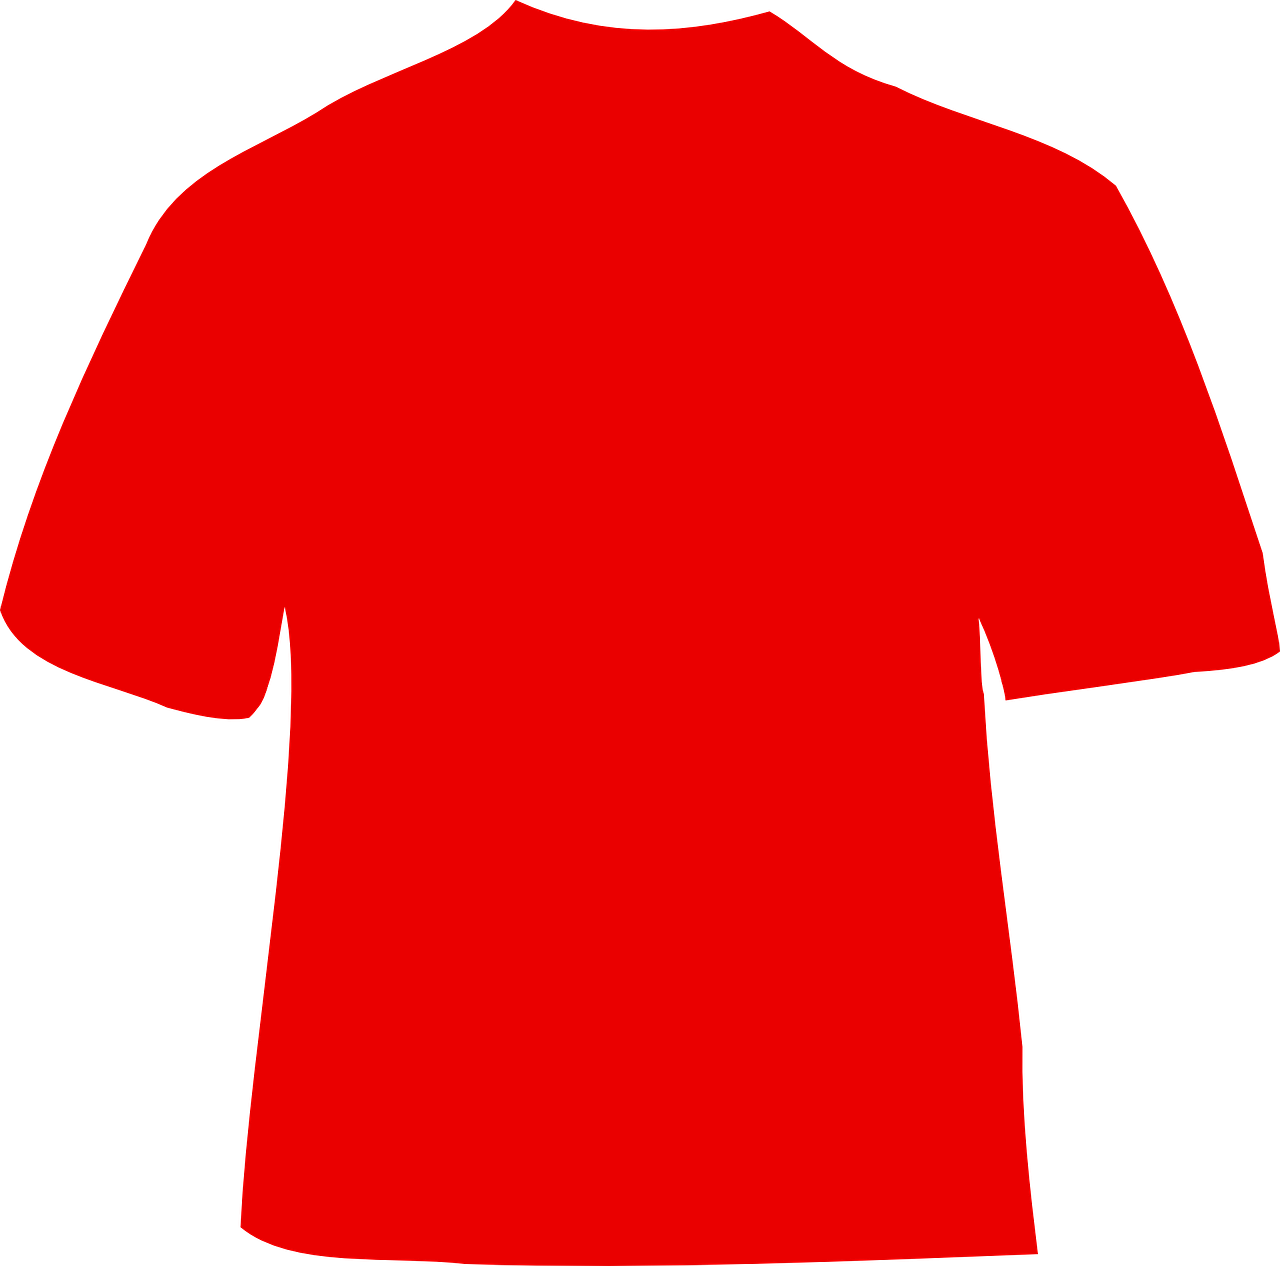 T-shirt,shirt,red,plain,cotton - free image from needpix.com